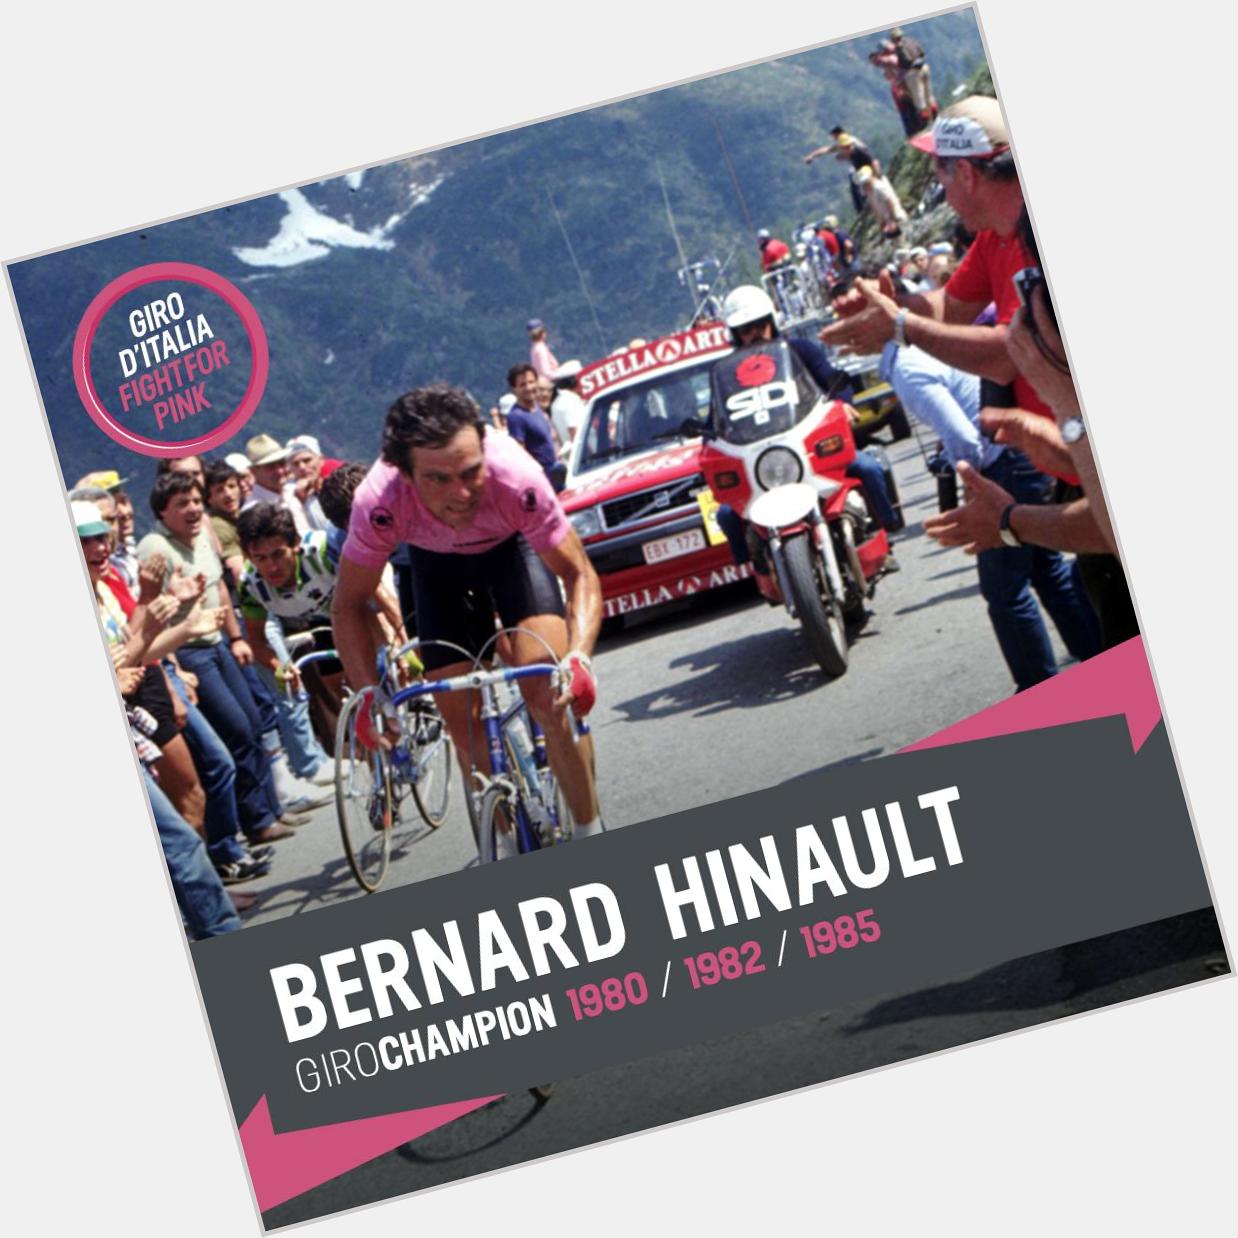 Third birthday of the day! 
Happy birthday Bernard Hinault! 